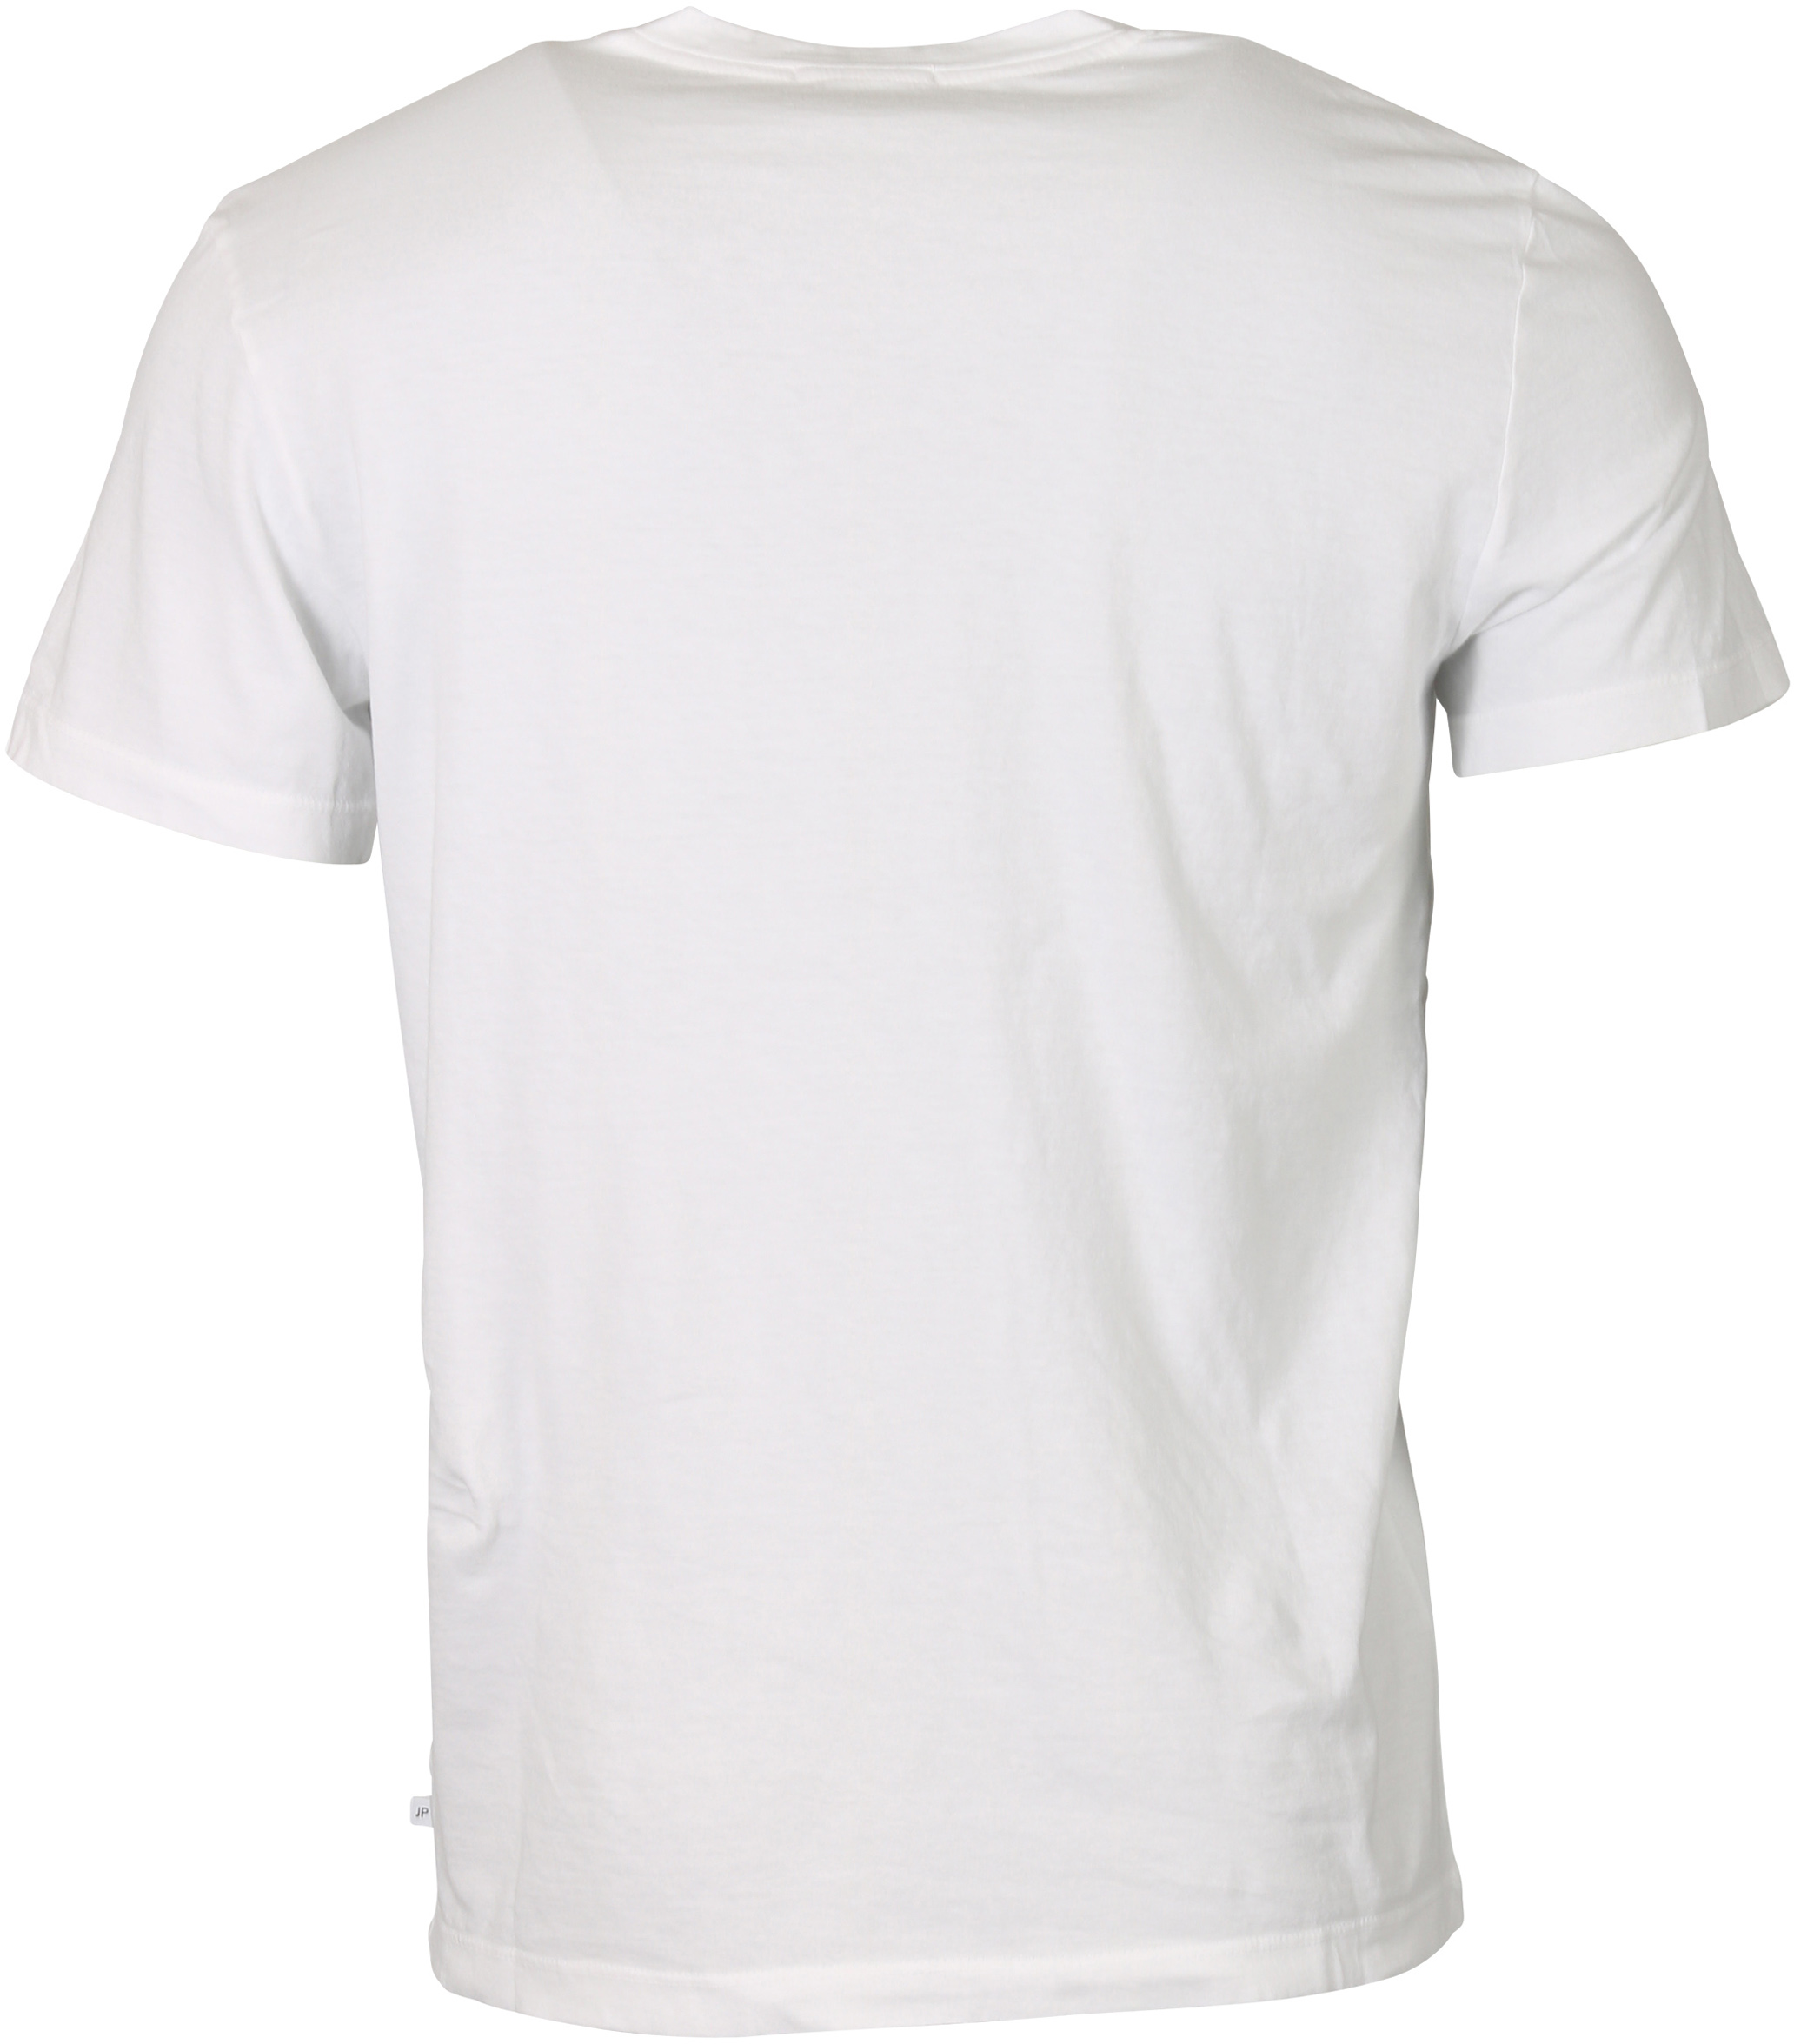 James Perse T-Shirt V-Neck White